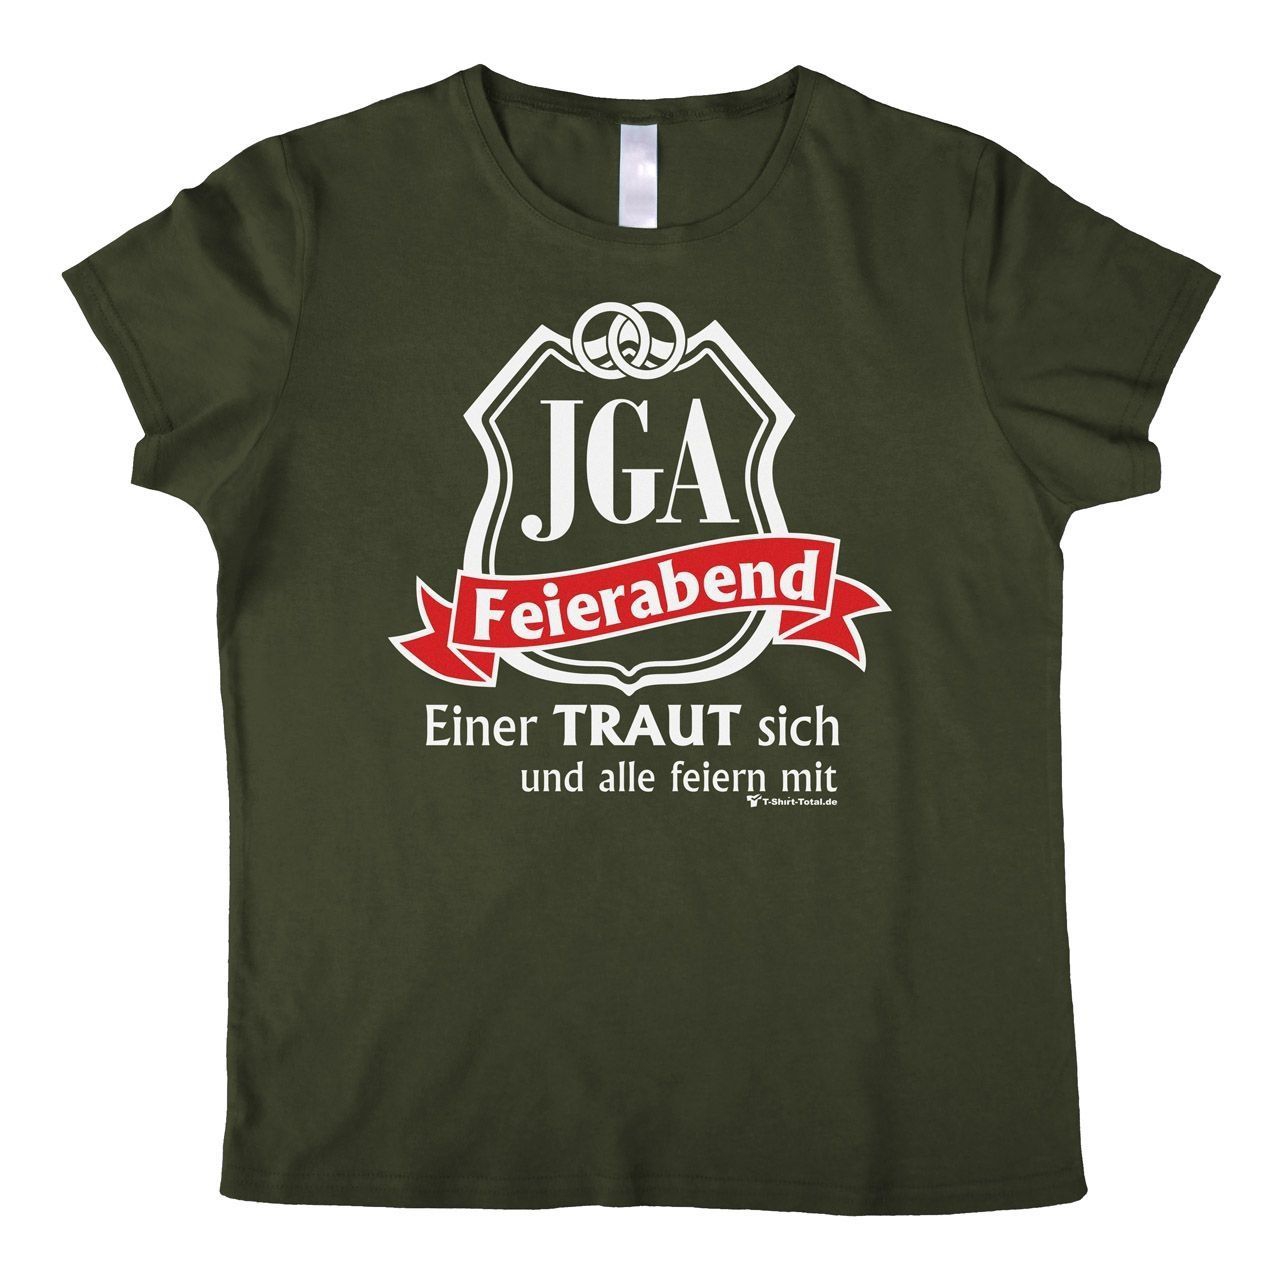 JGA Feierabend Woman T-Shirt khaki Small